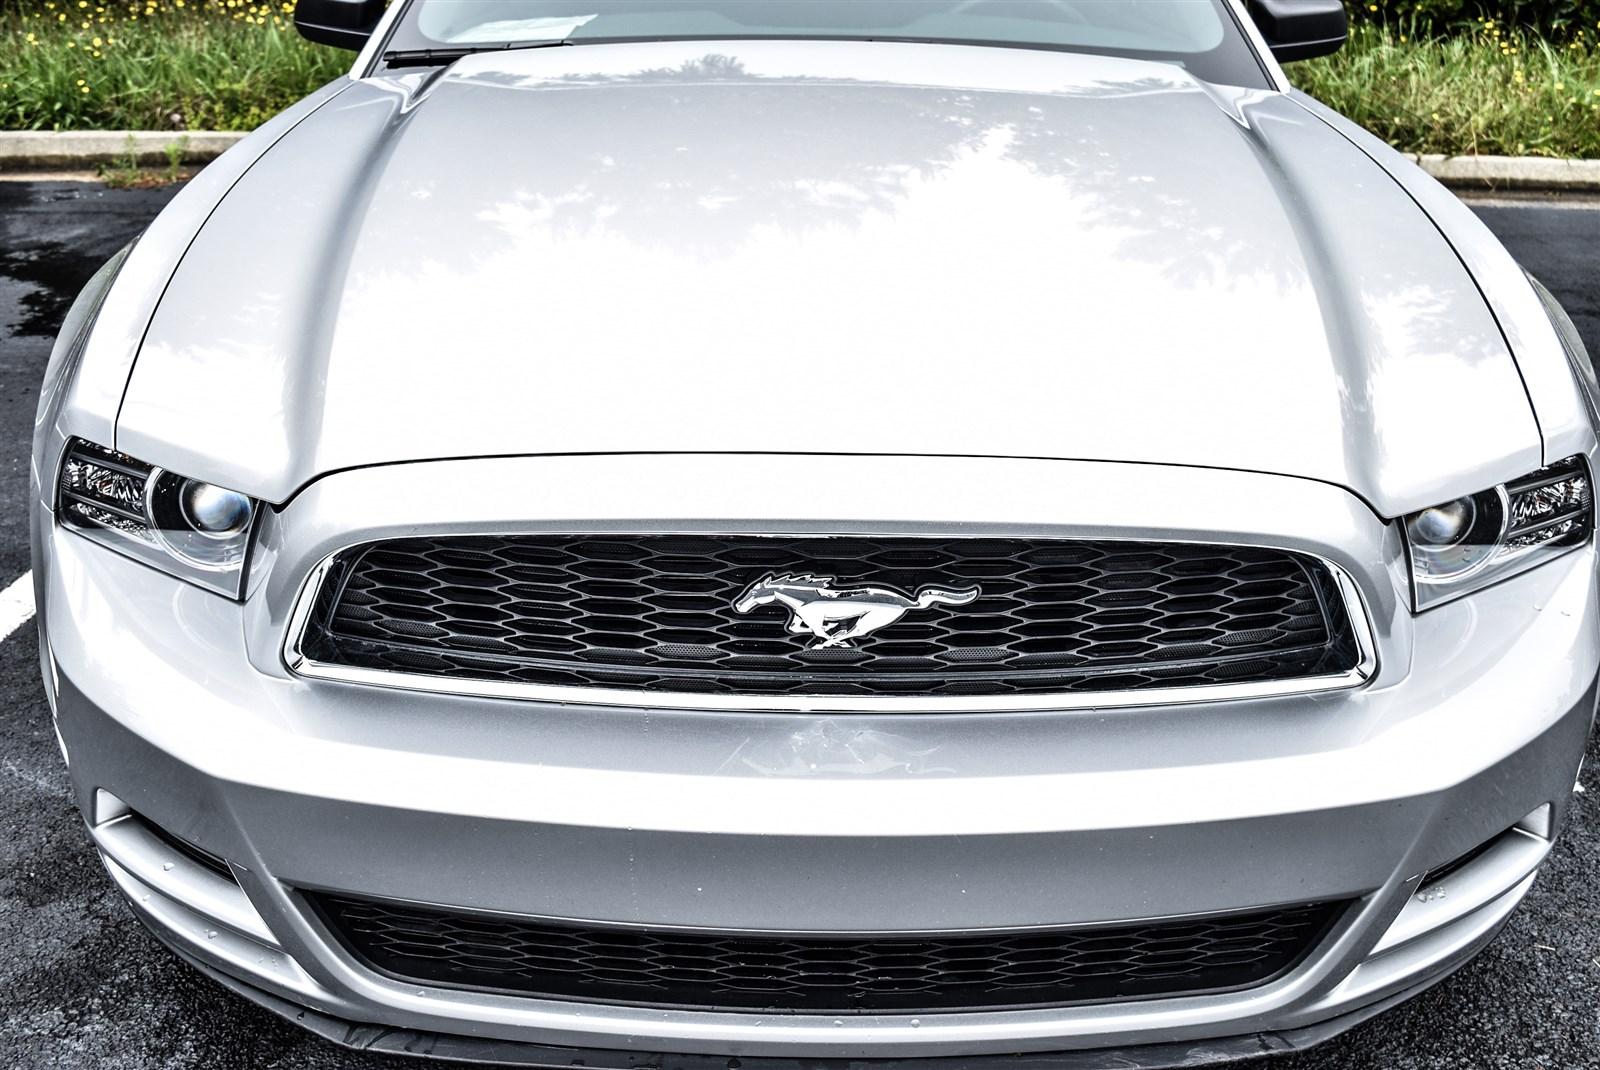 Used 2014 Ford Mustang V6 Premium for sale Sold at Gravity Autos Marietta in Marietta GA 30060 3